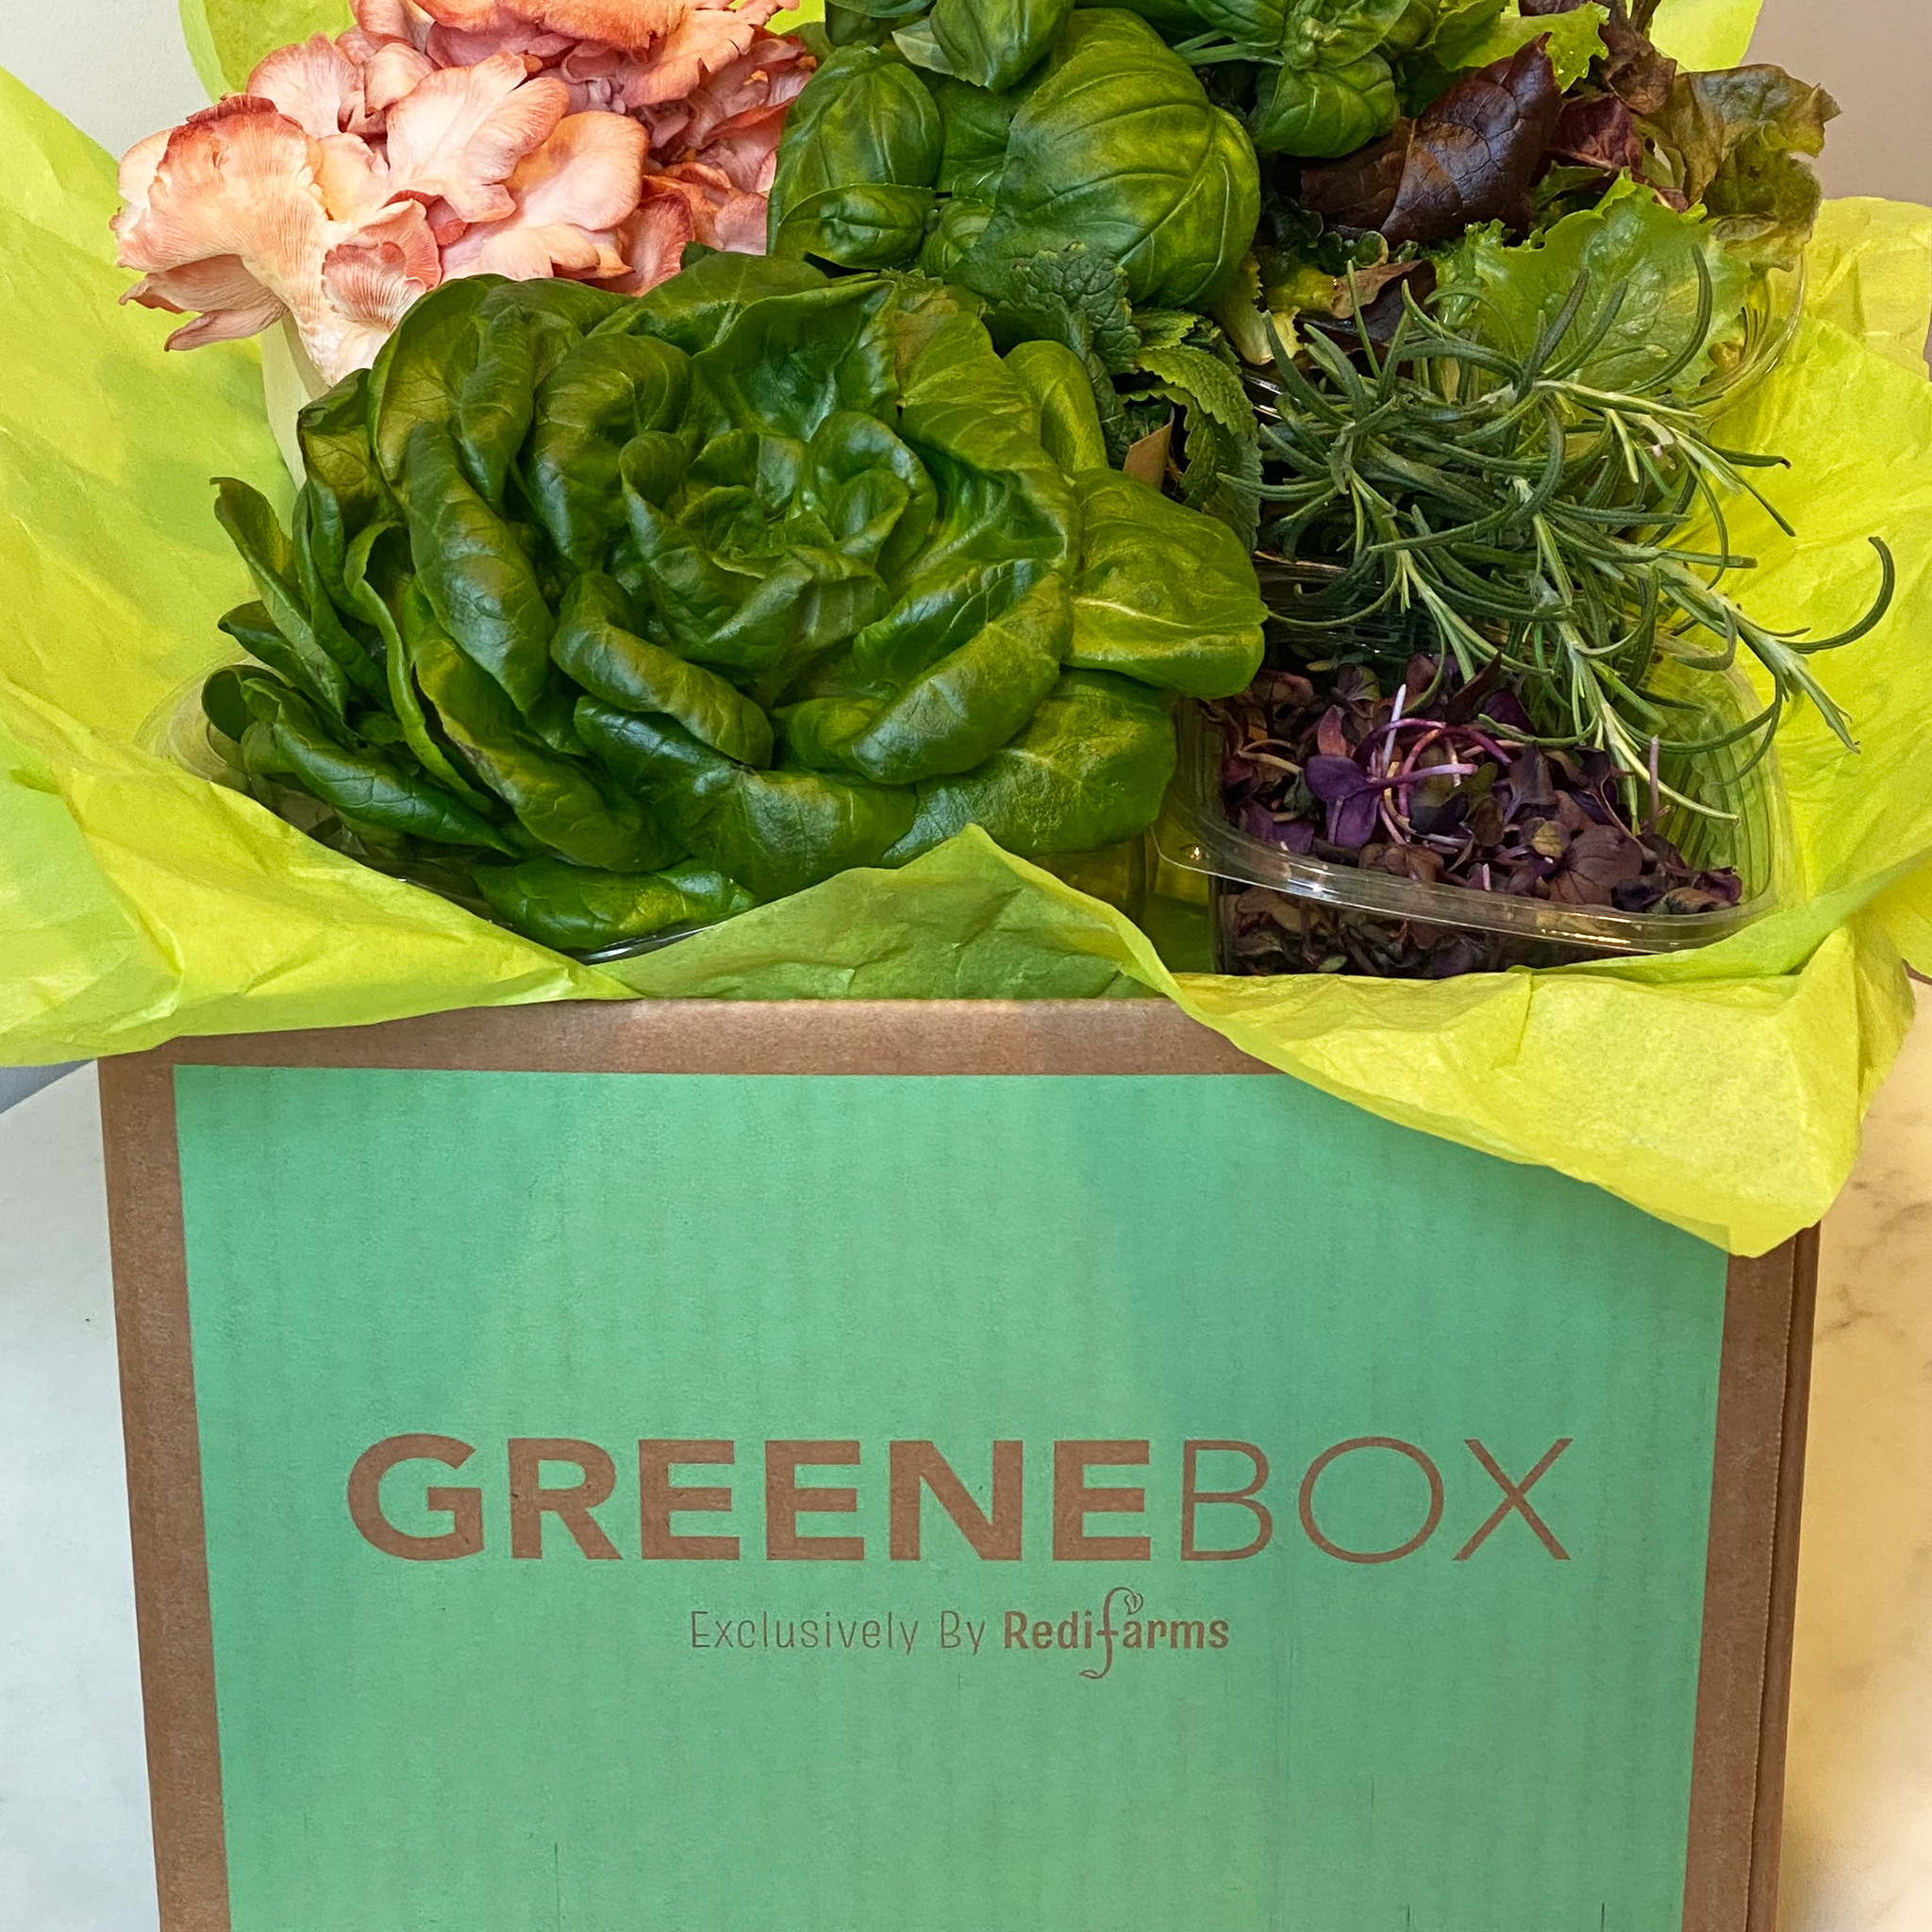 The Greene Box